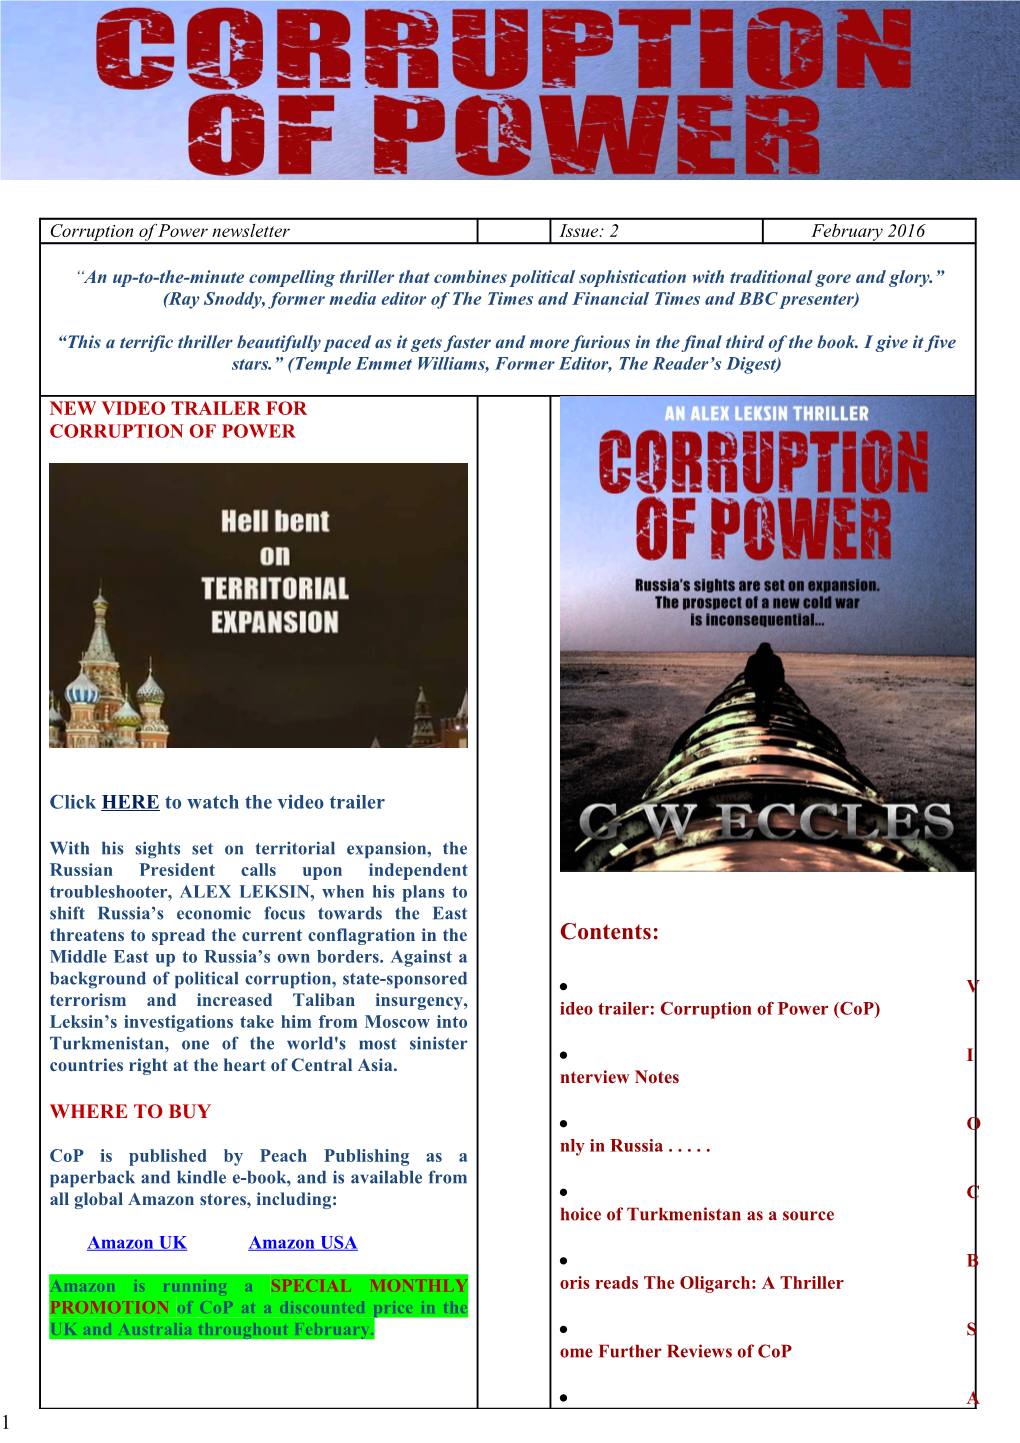 Video Trailer: Corruption of Power (Cop)